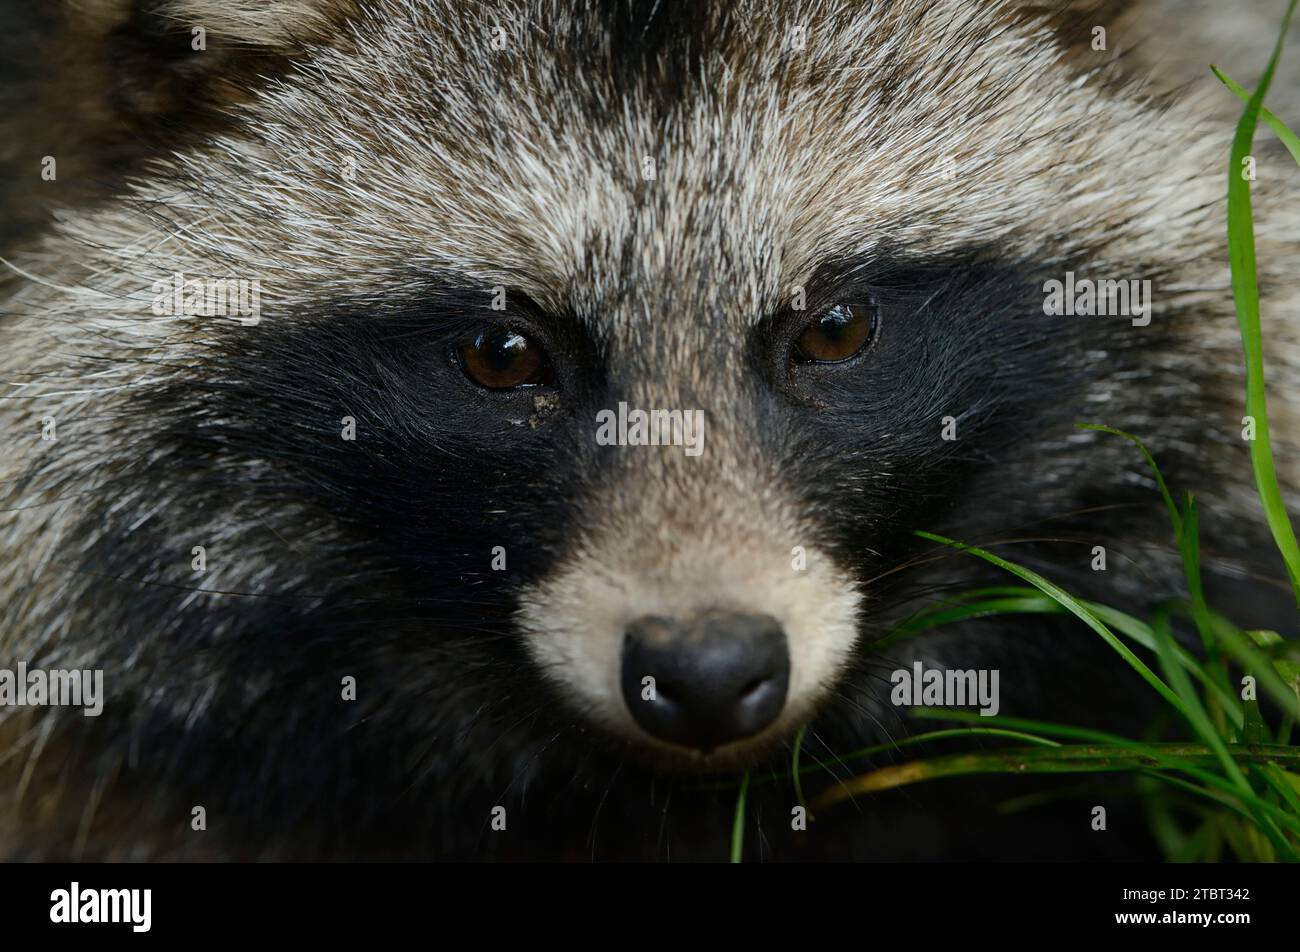 Raccoon dog (Nyctereutes procyonoides), portrait, Germany Stock Photo